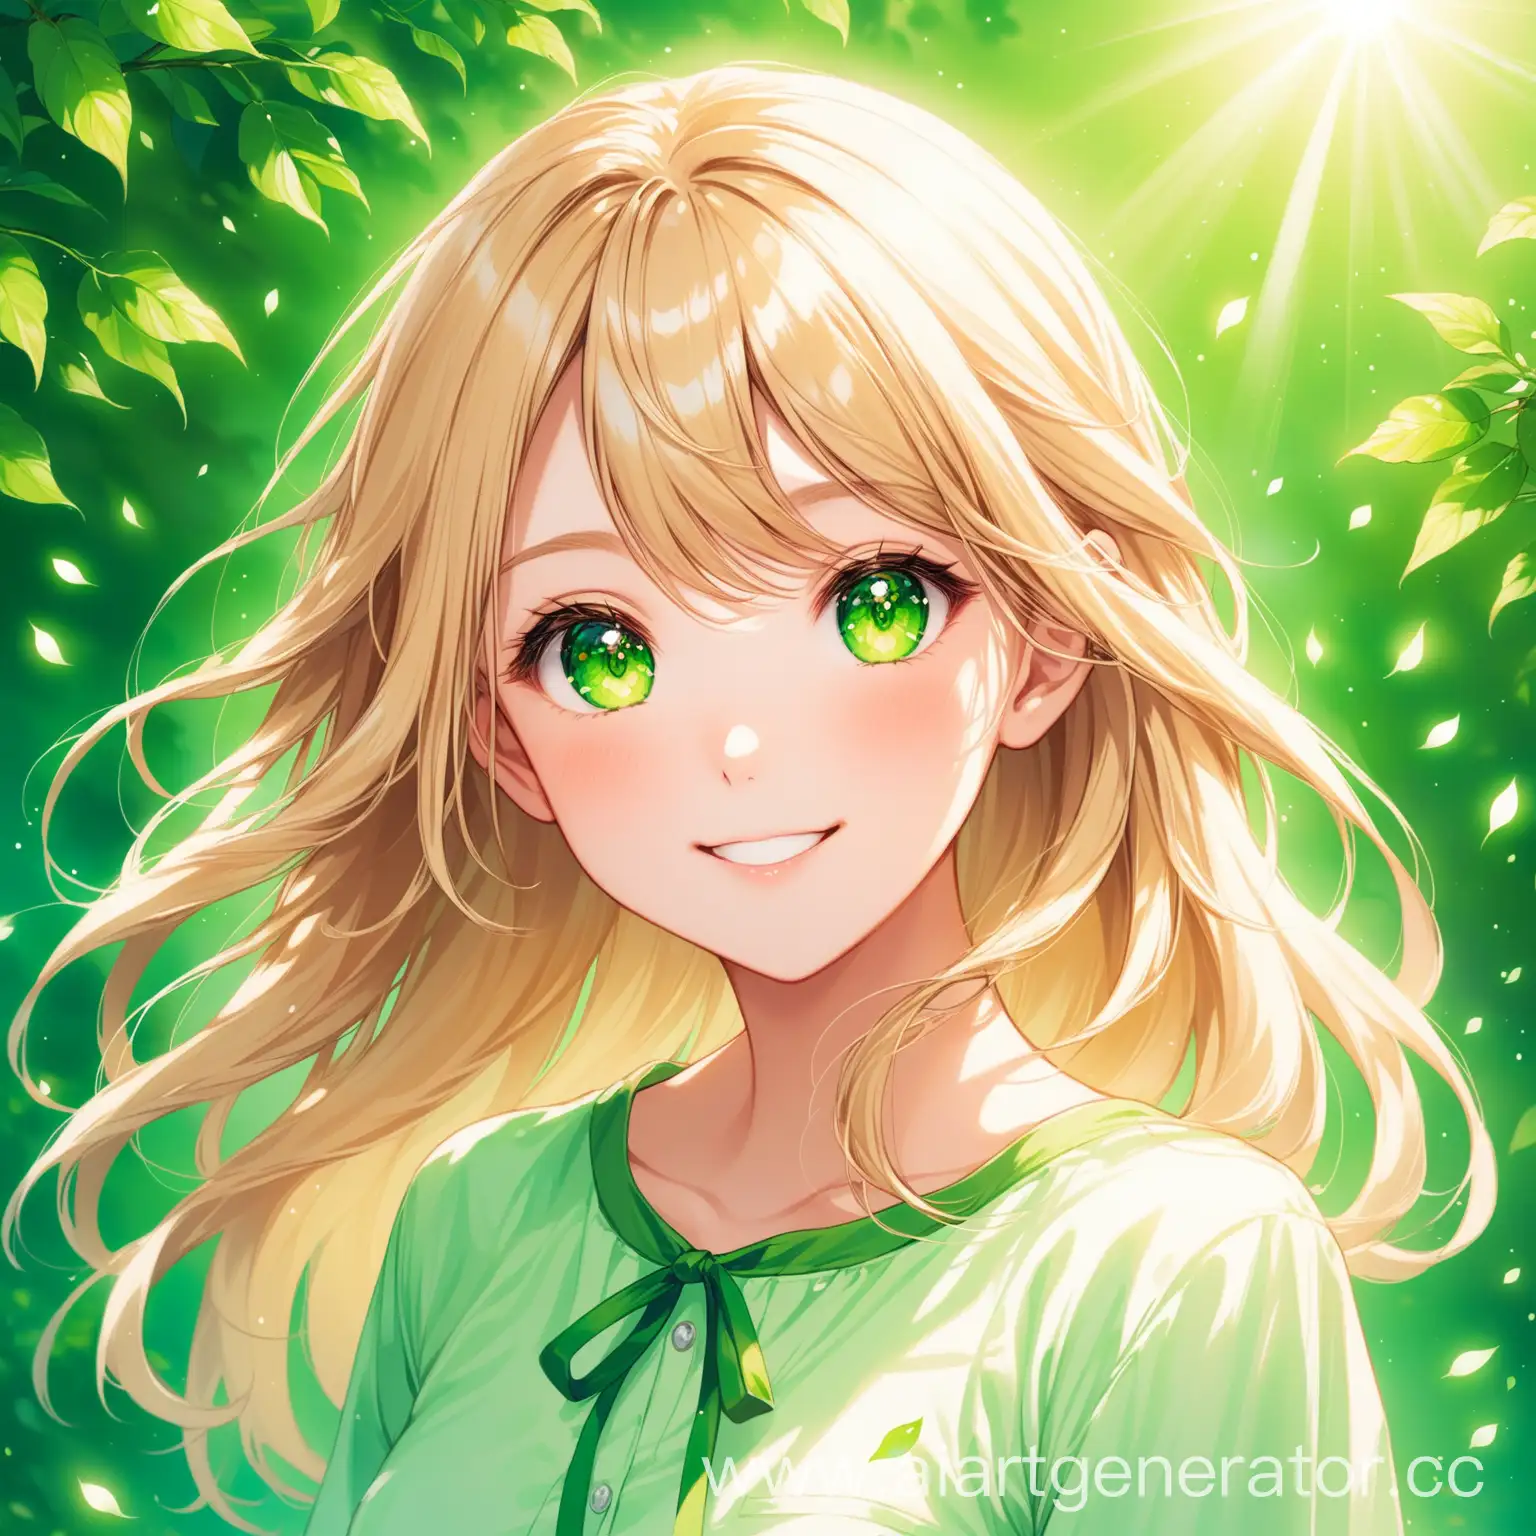 Joyful-Girl-with-Light-Hair-and-Green-Eyes-Portrait